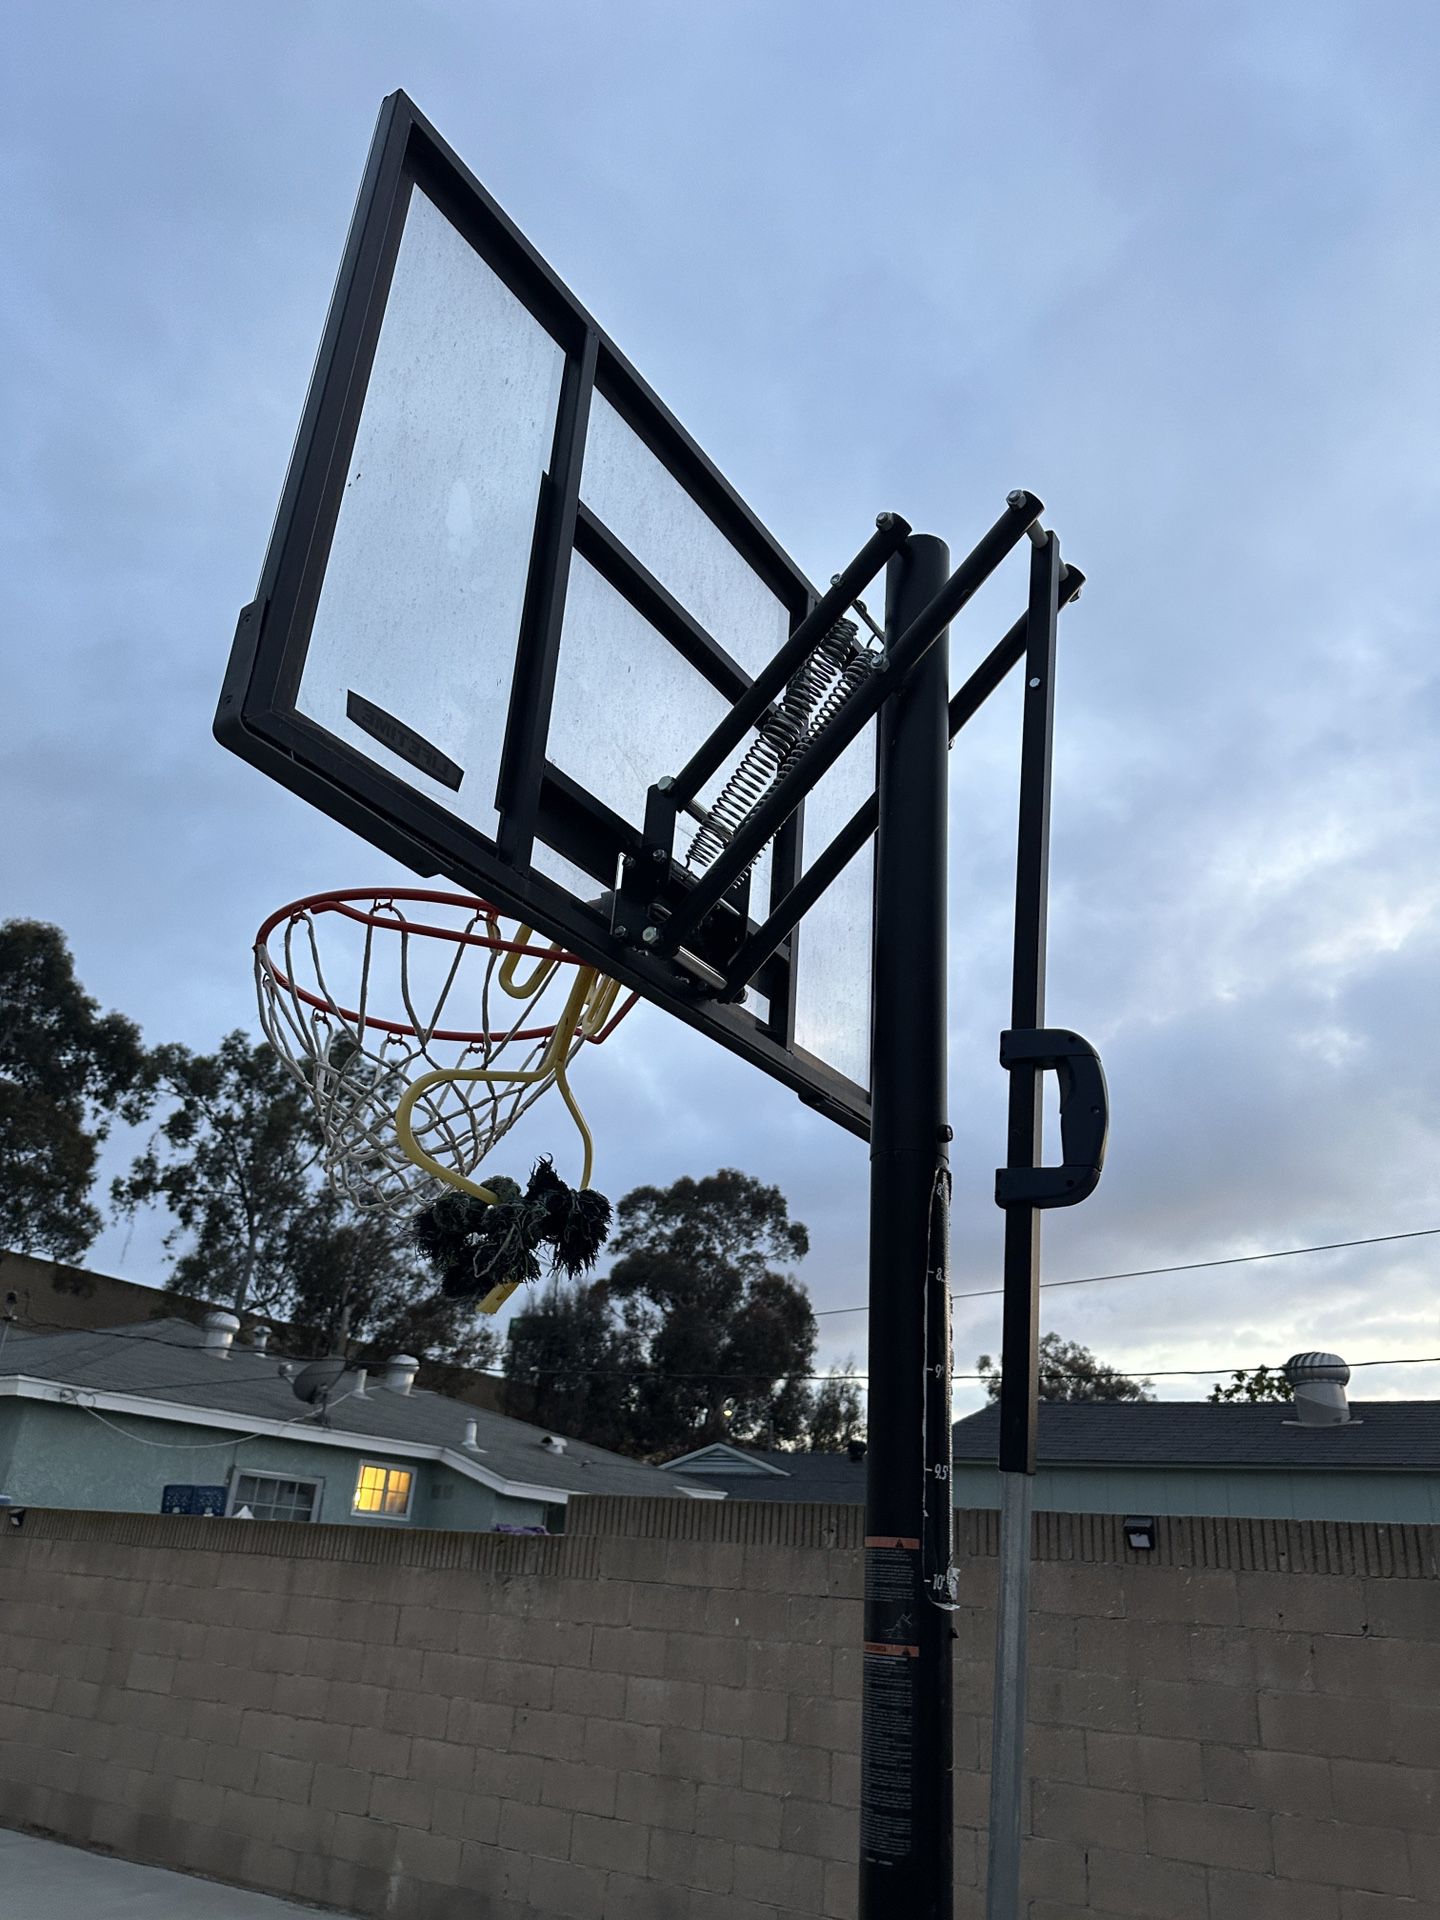 Lifetime Portable Basketball Hoop